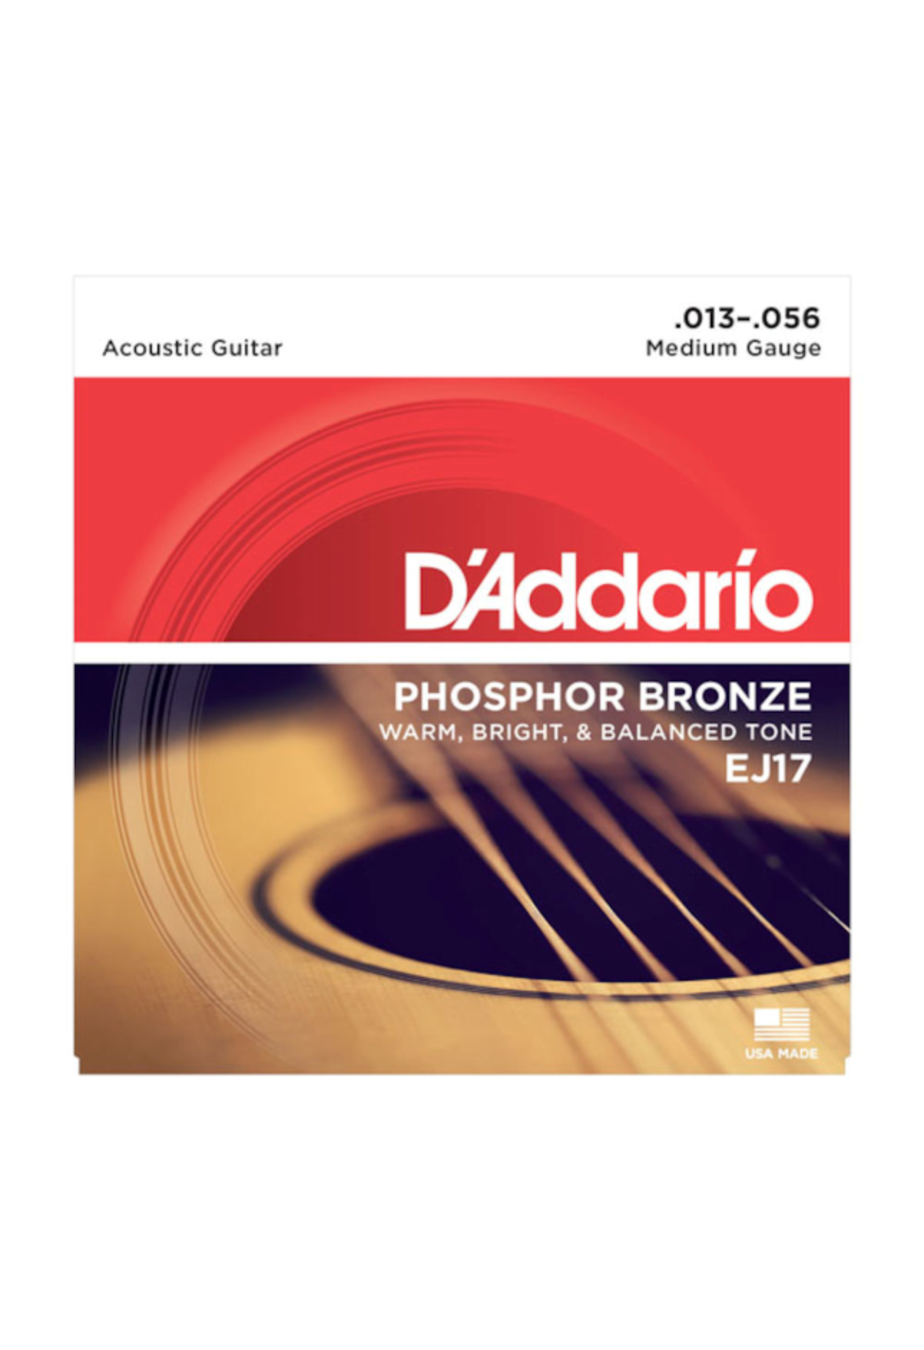 D'Addario D'Addario Phosphor Bronze Acoustic Medium Gauge